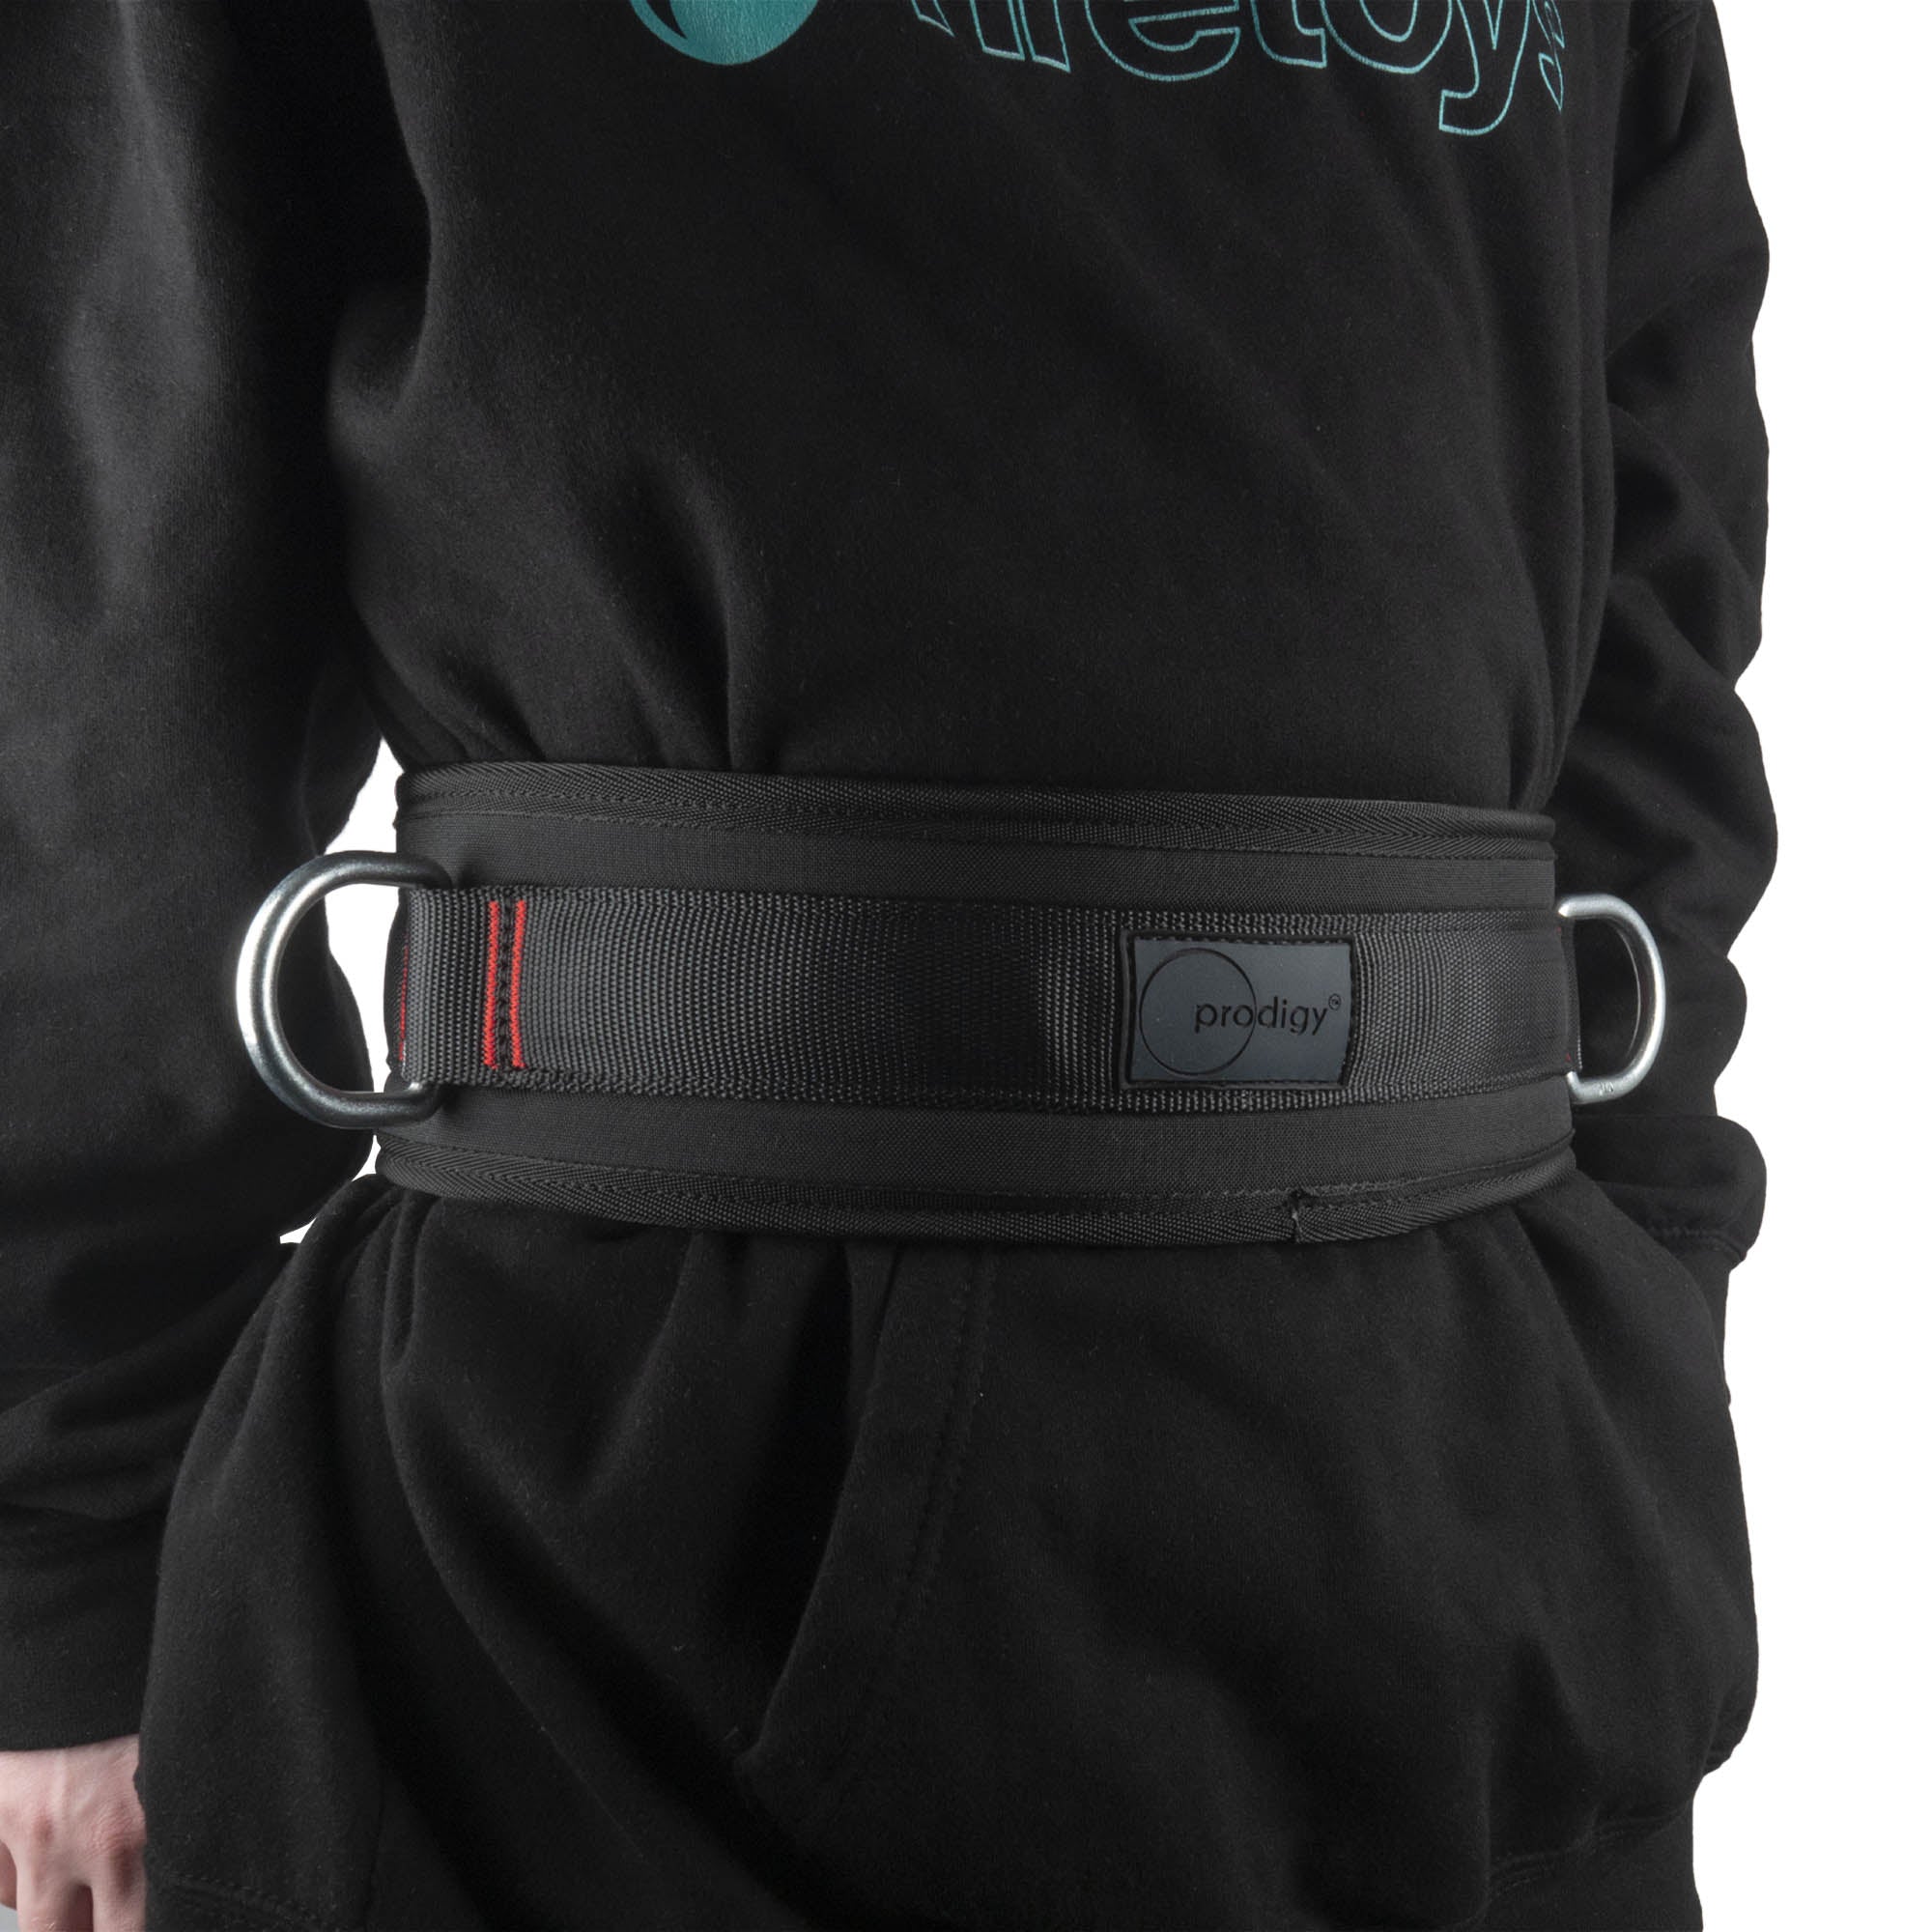 Prodigy Acro Lunge Belts size 3 worn